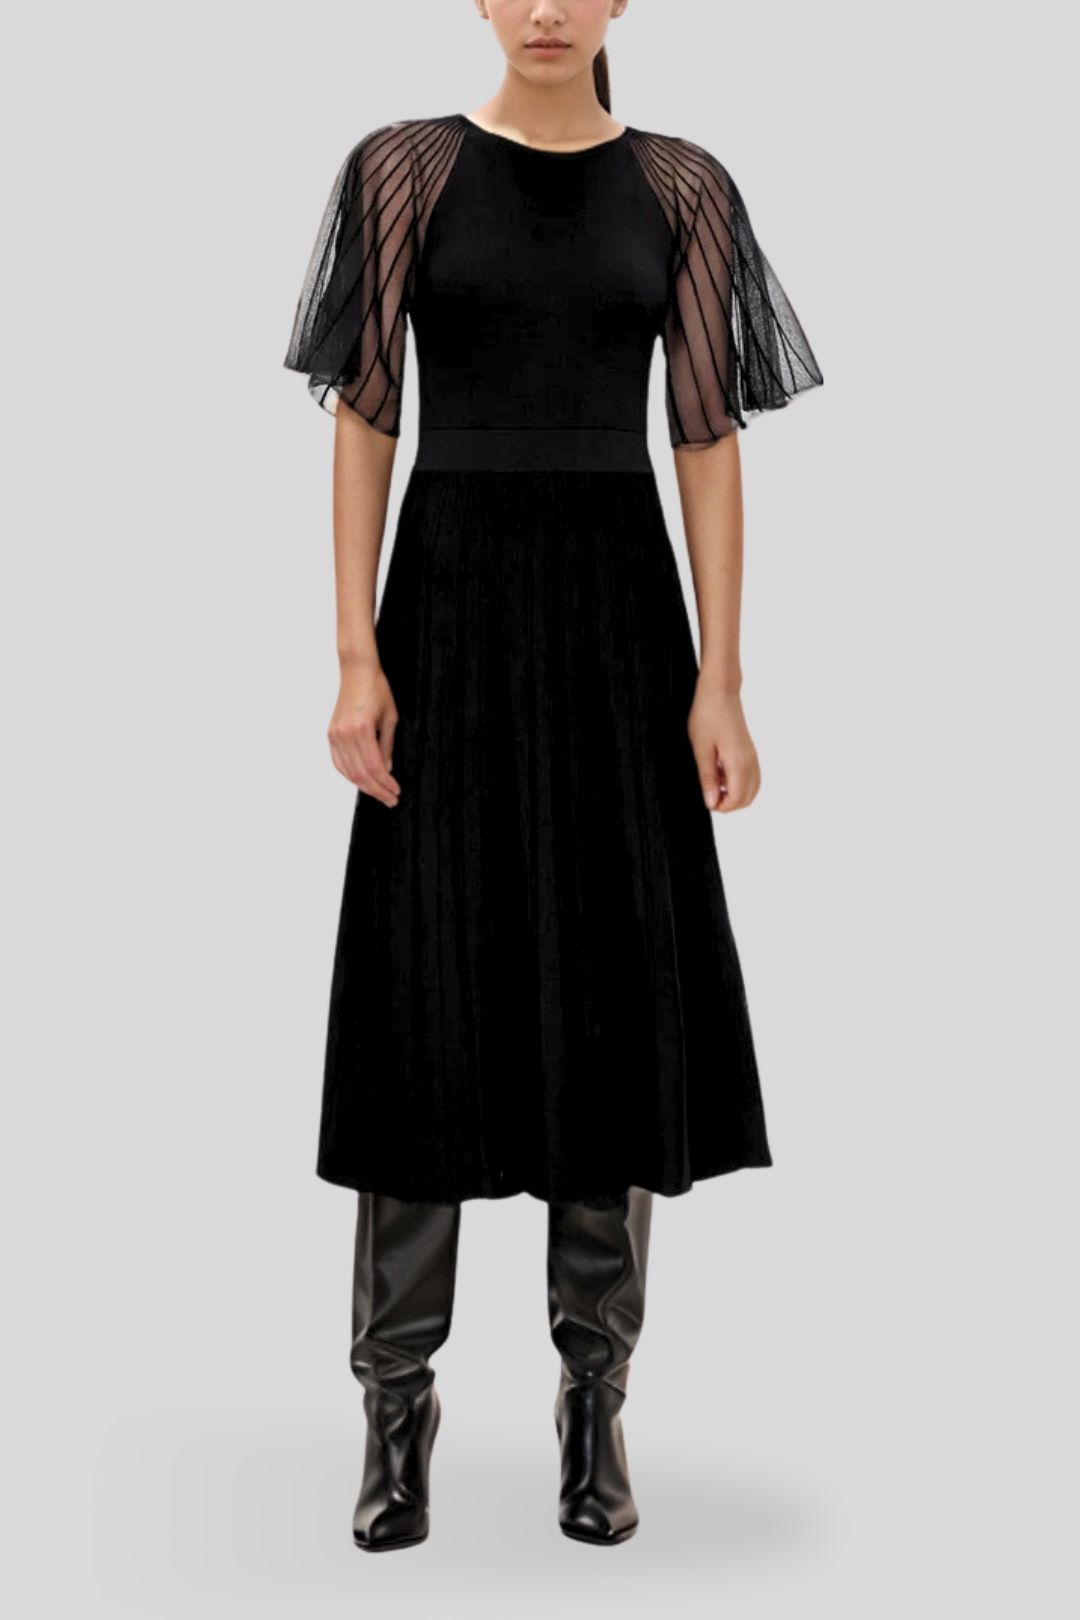 Veronika Maine Sheer Sleeve Pleated Knit Dress in Black